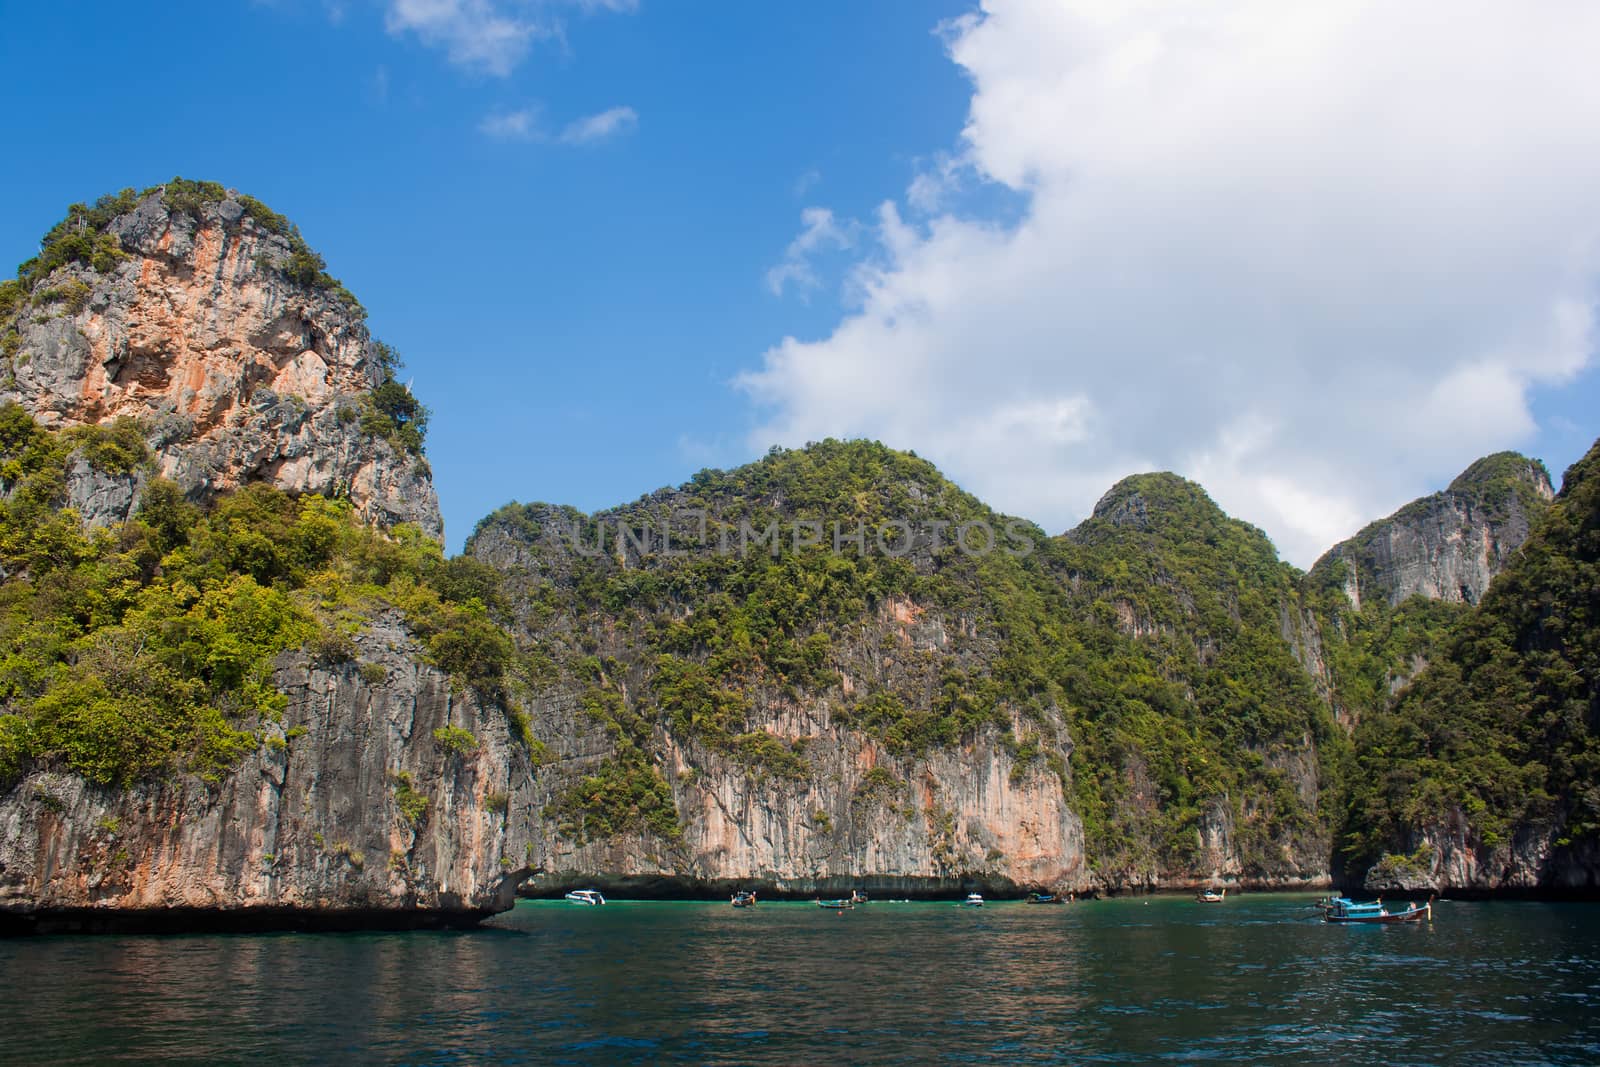 Island of Phi Phi Leh in Thailand by sateda